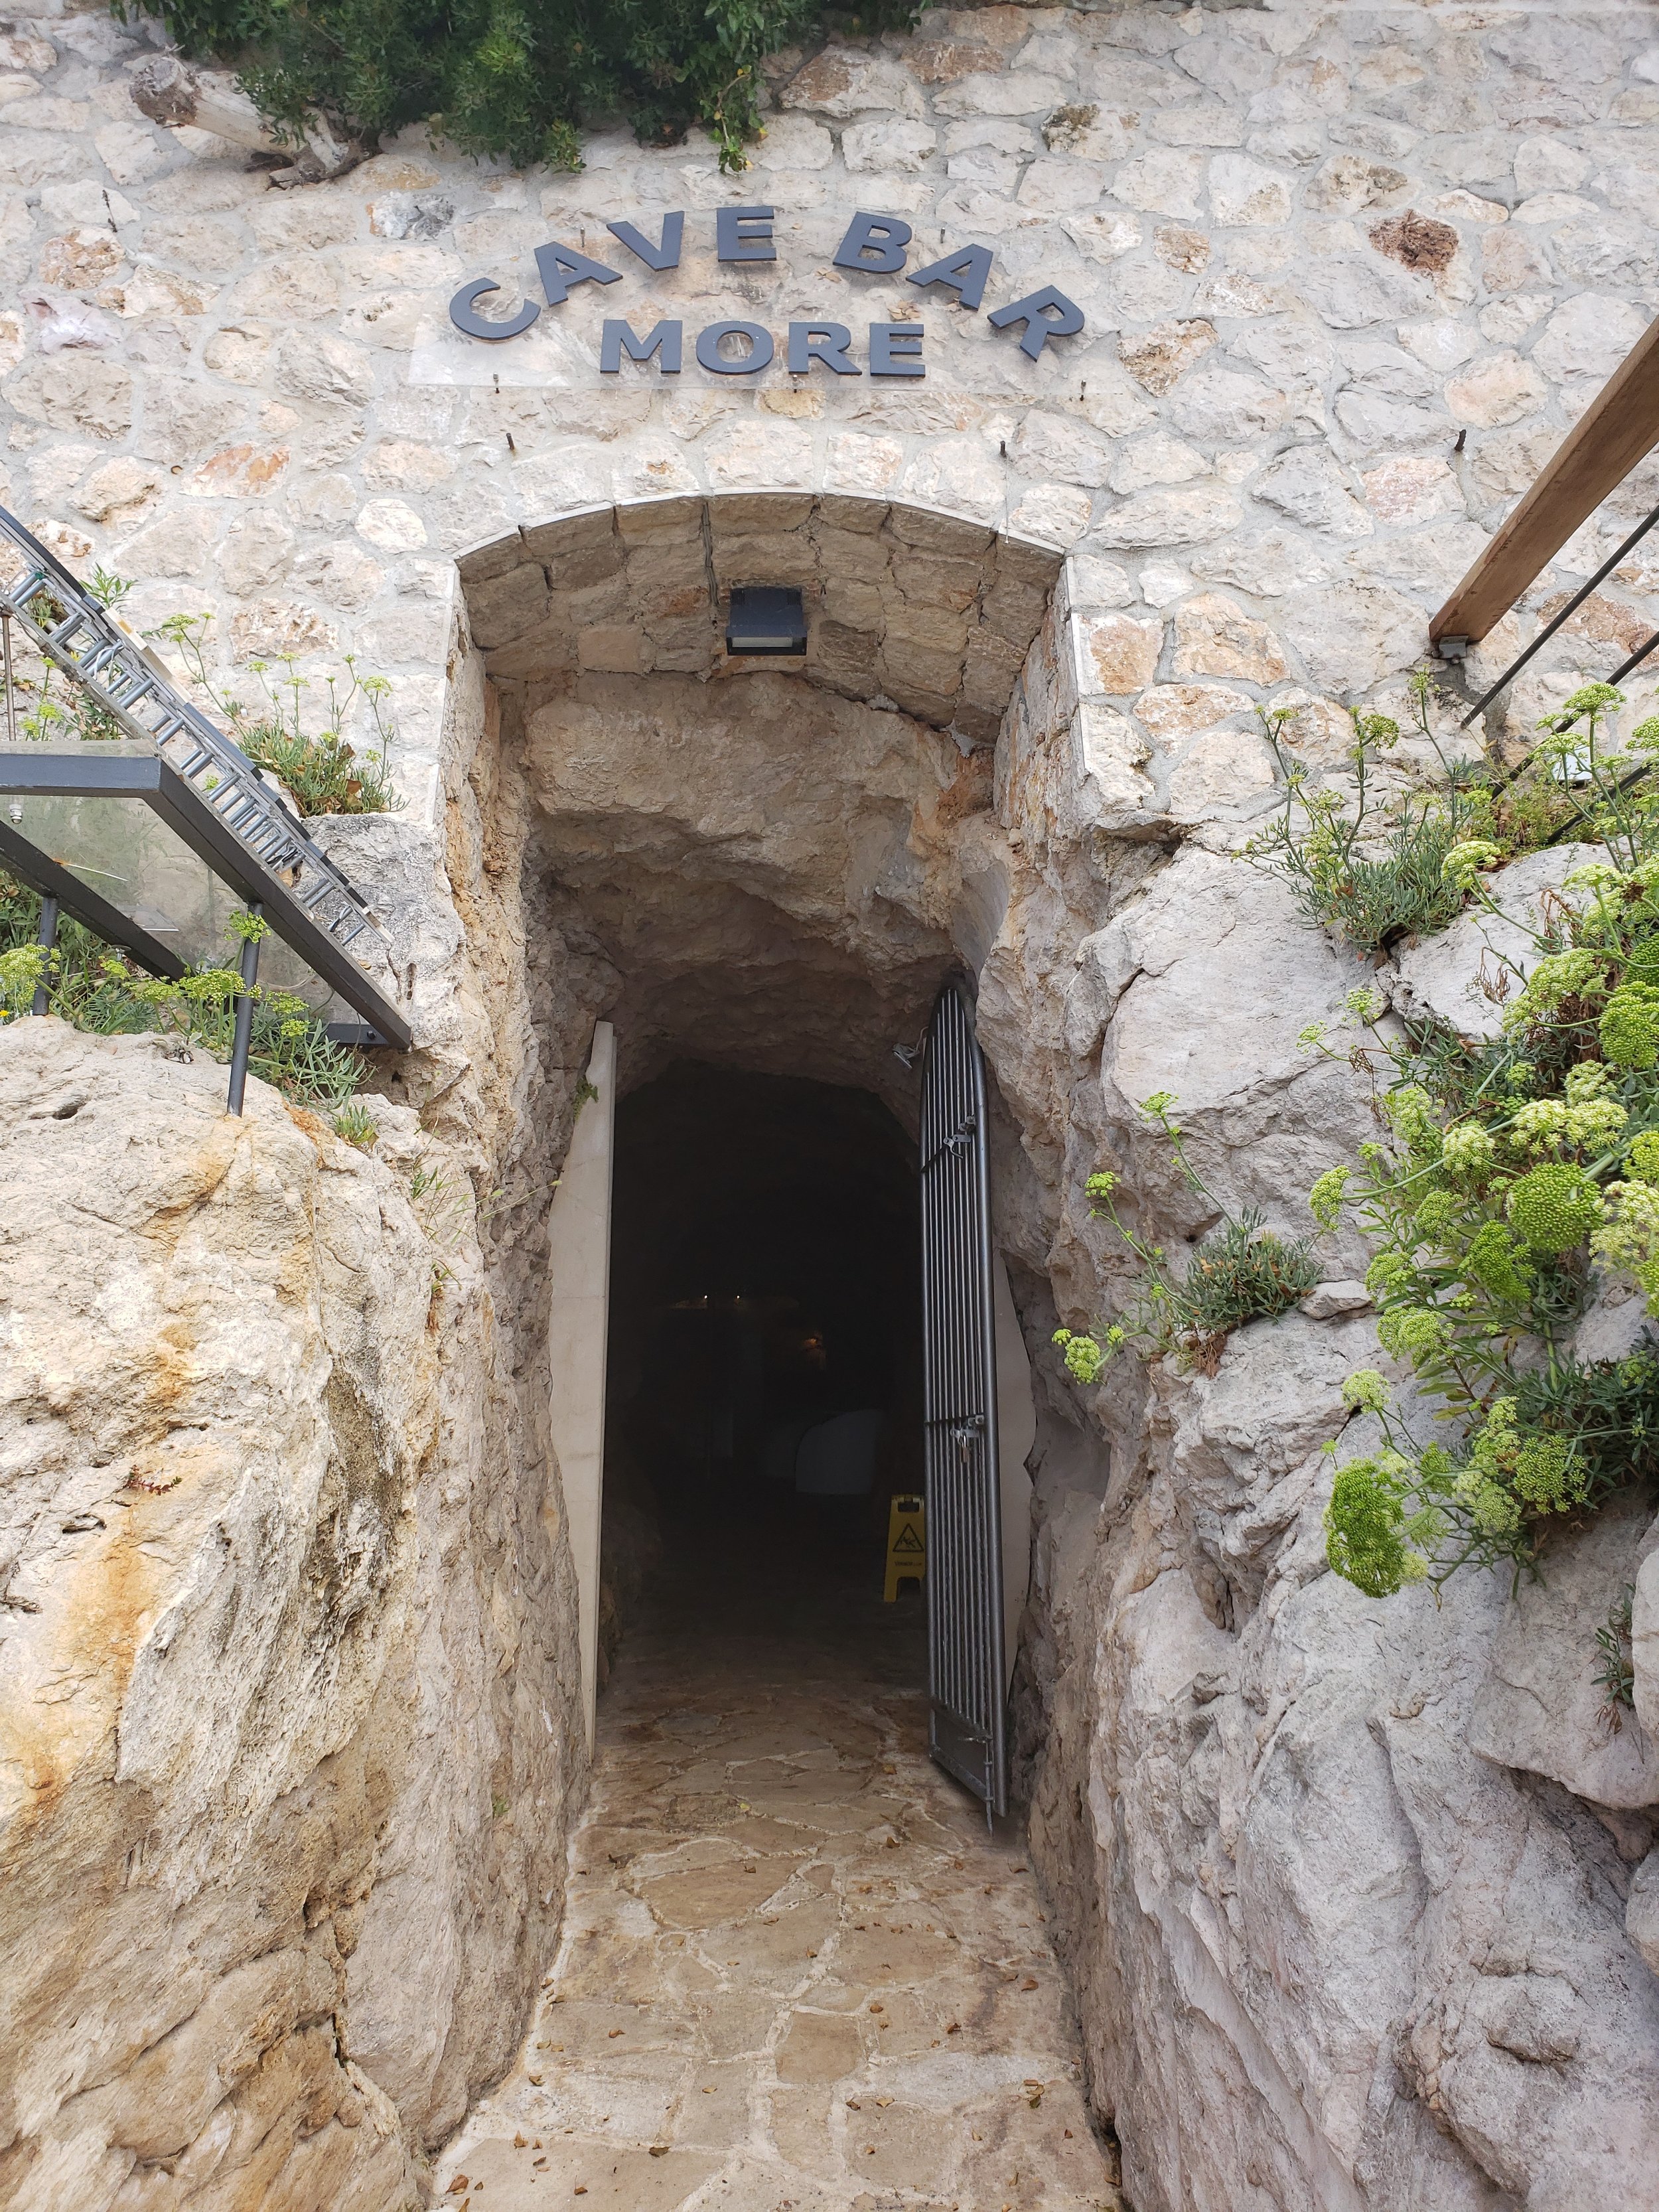  More Cave Bar entrance 